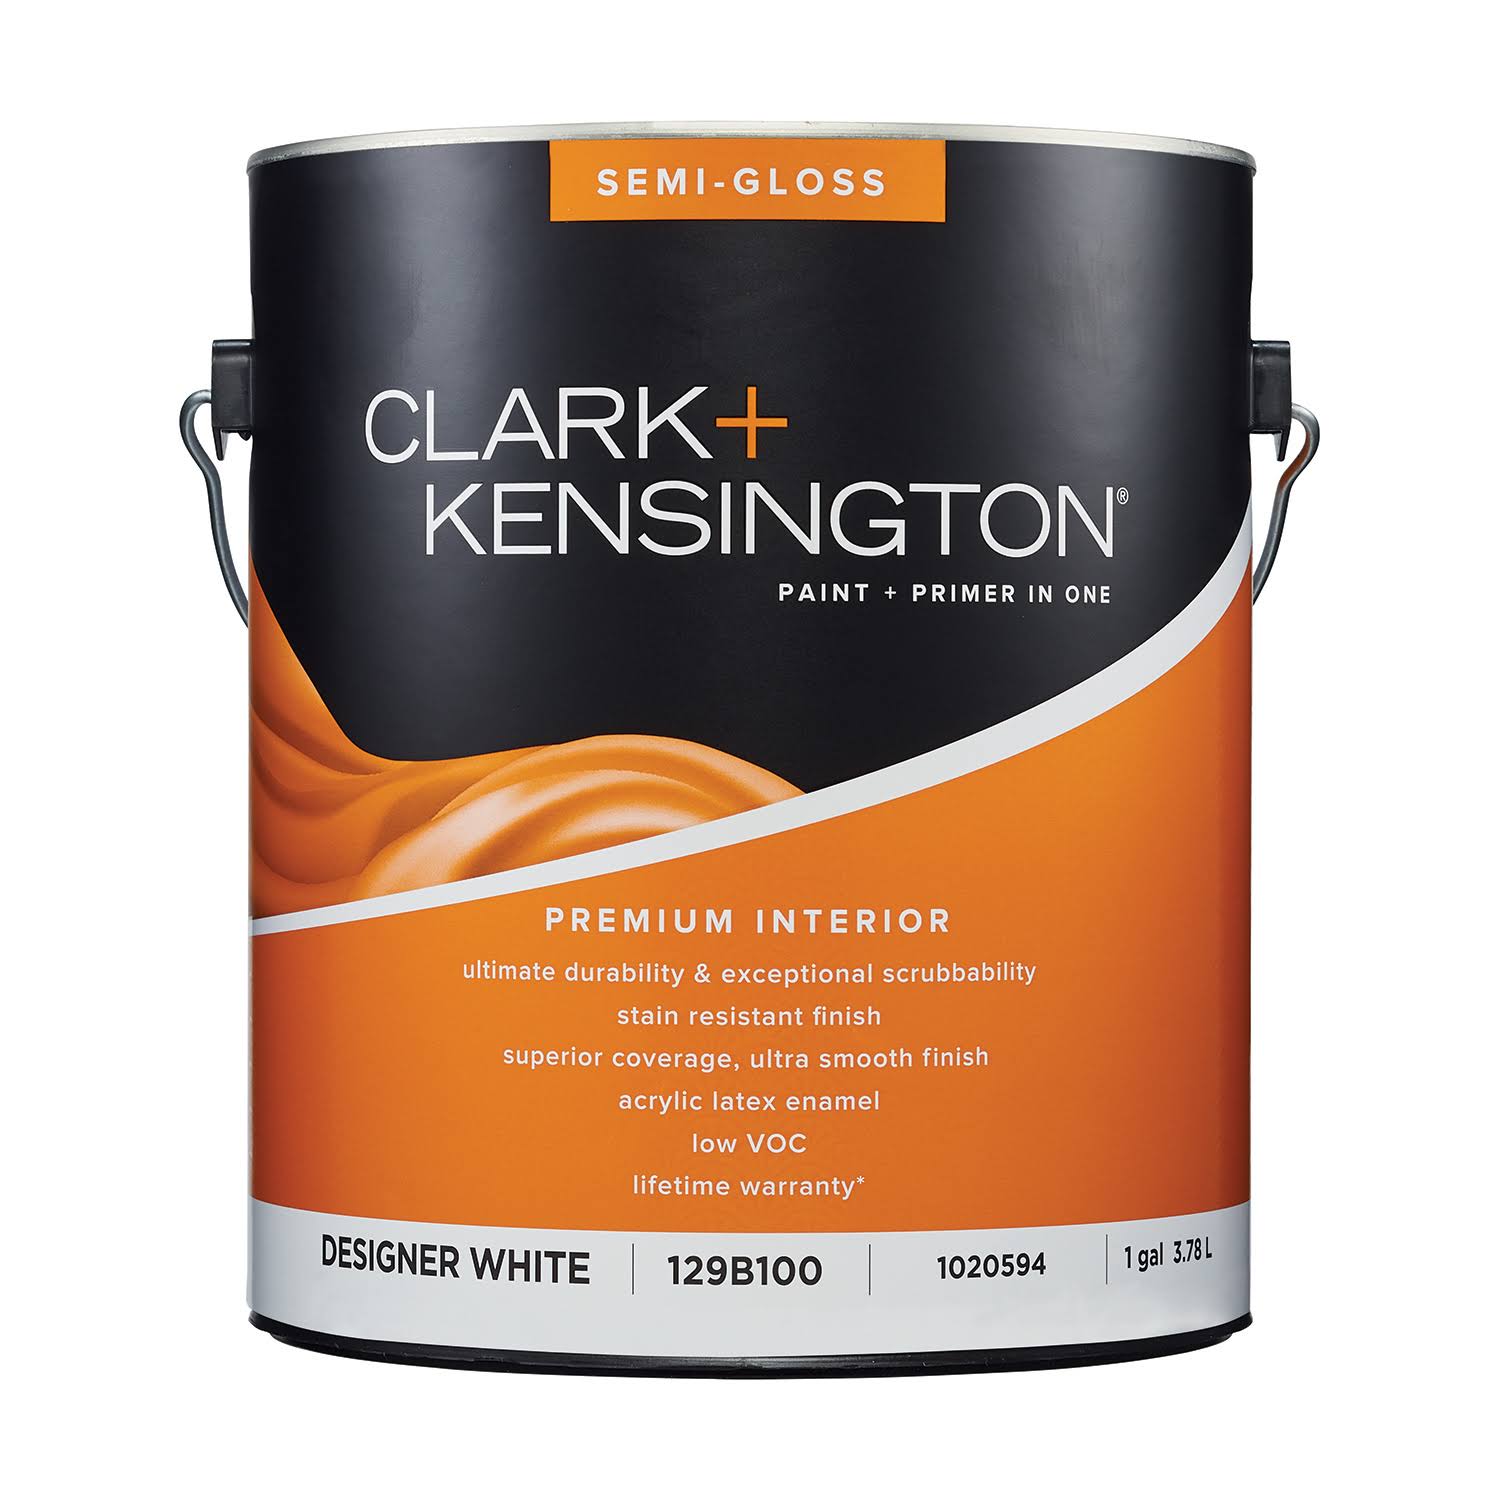 Clark+kensington Semi-Gloss Designer White Premium Paint Interior 1 Gal